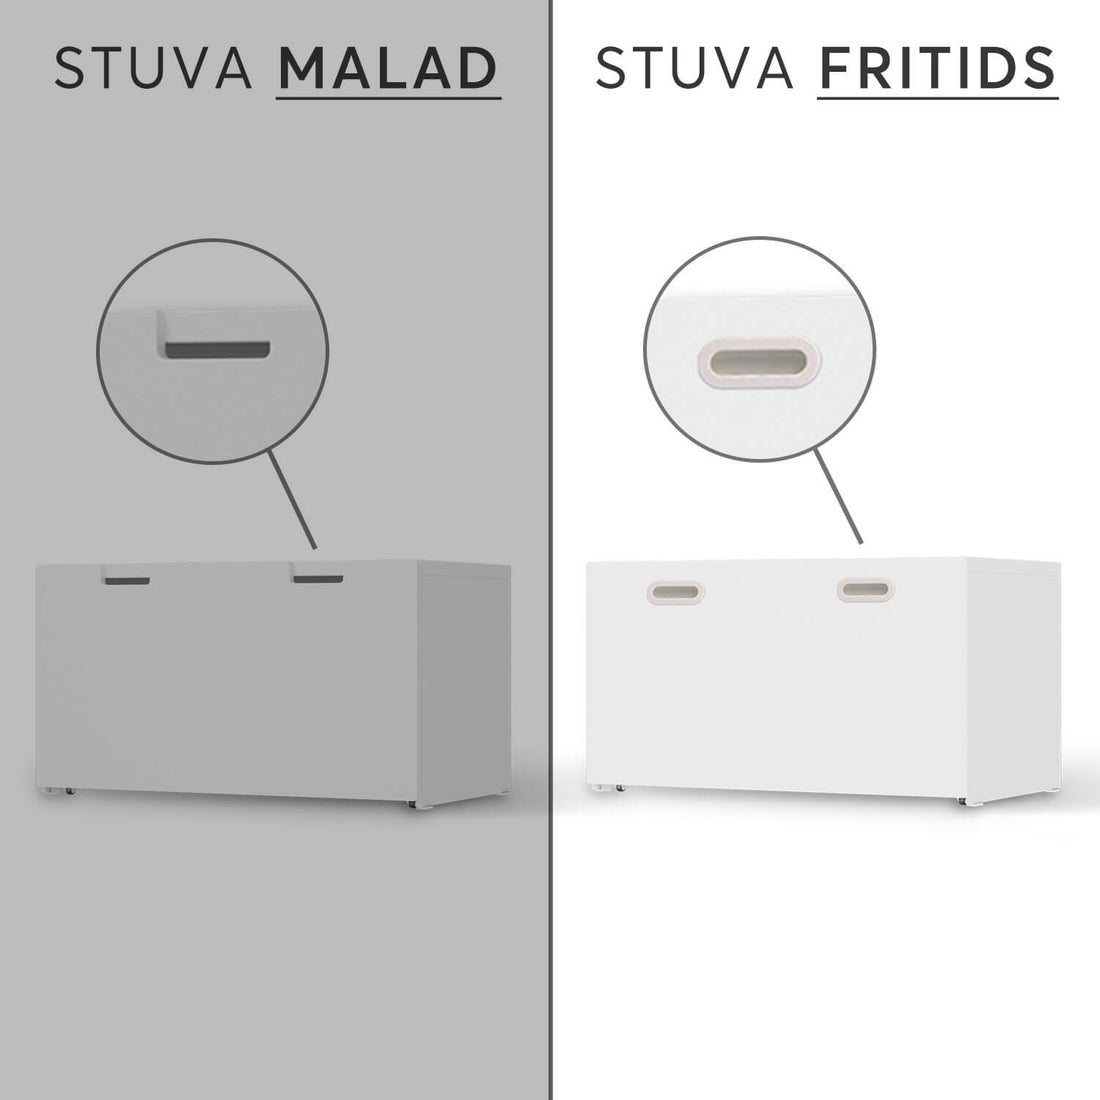 Vergleich IKEA Stuva Fritids / Malad - Space Rocket